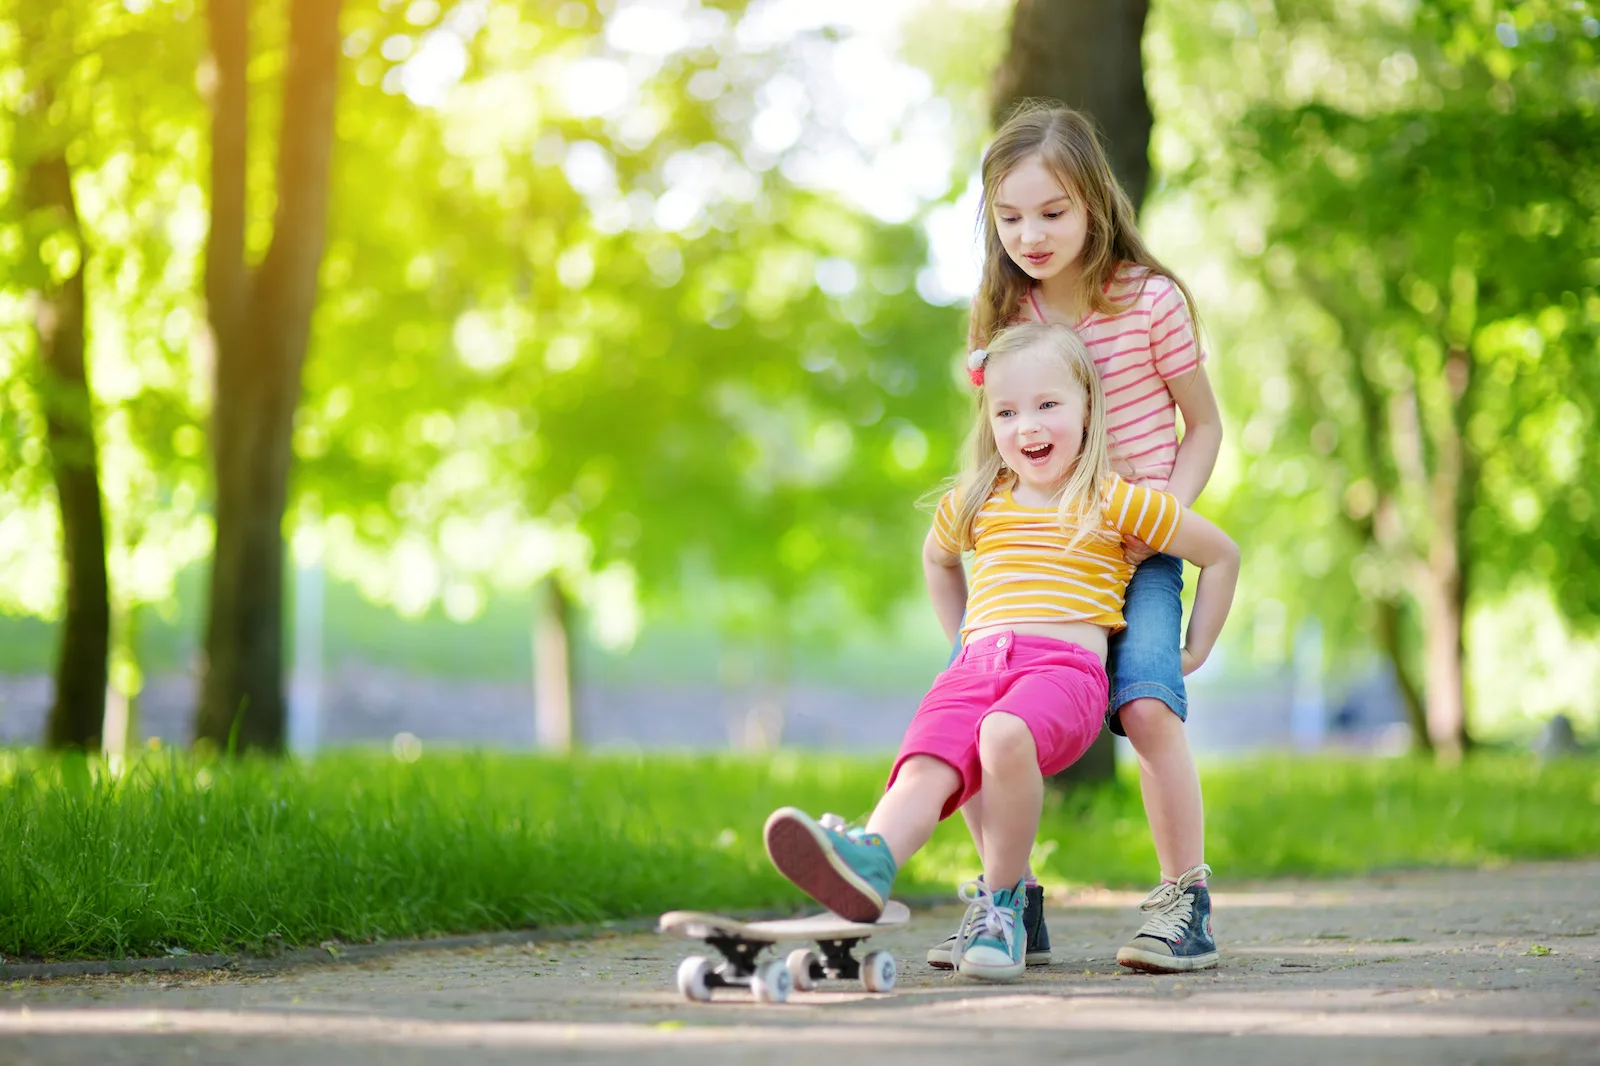 Two pretty little girls learning to skateboard on beautiful summer day in a park. Children enjoying skateboarding ride outdoors.